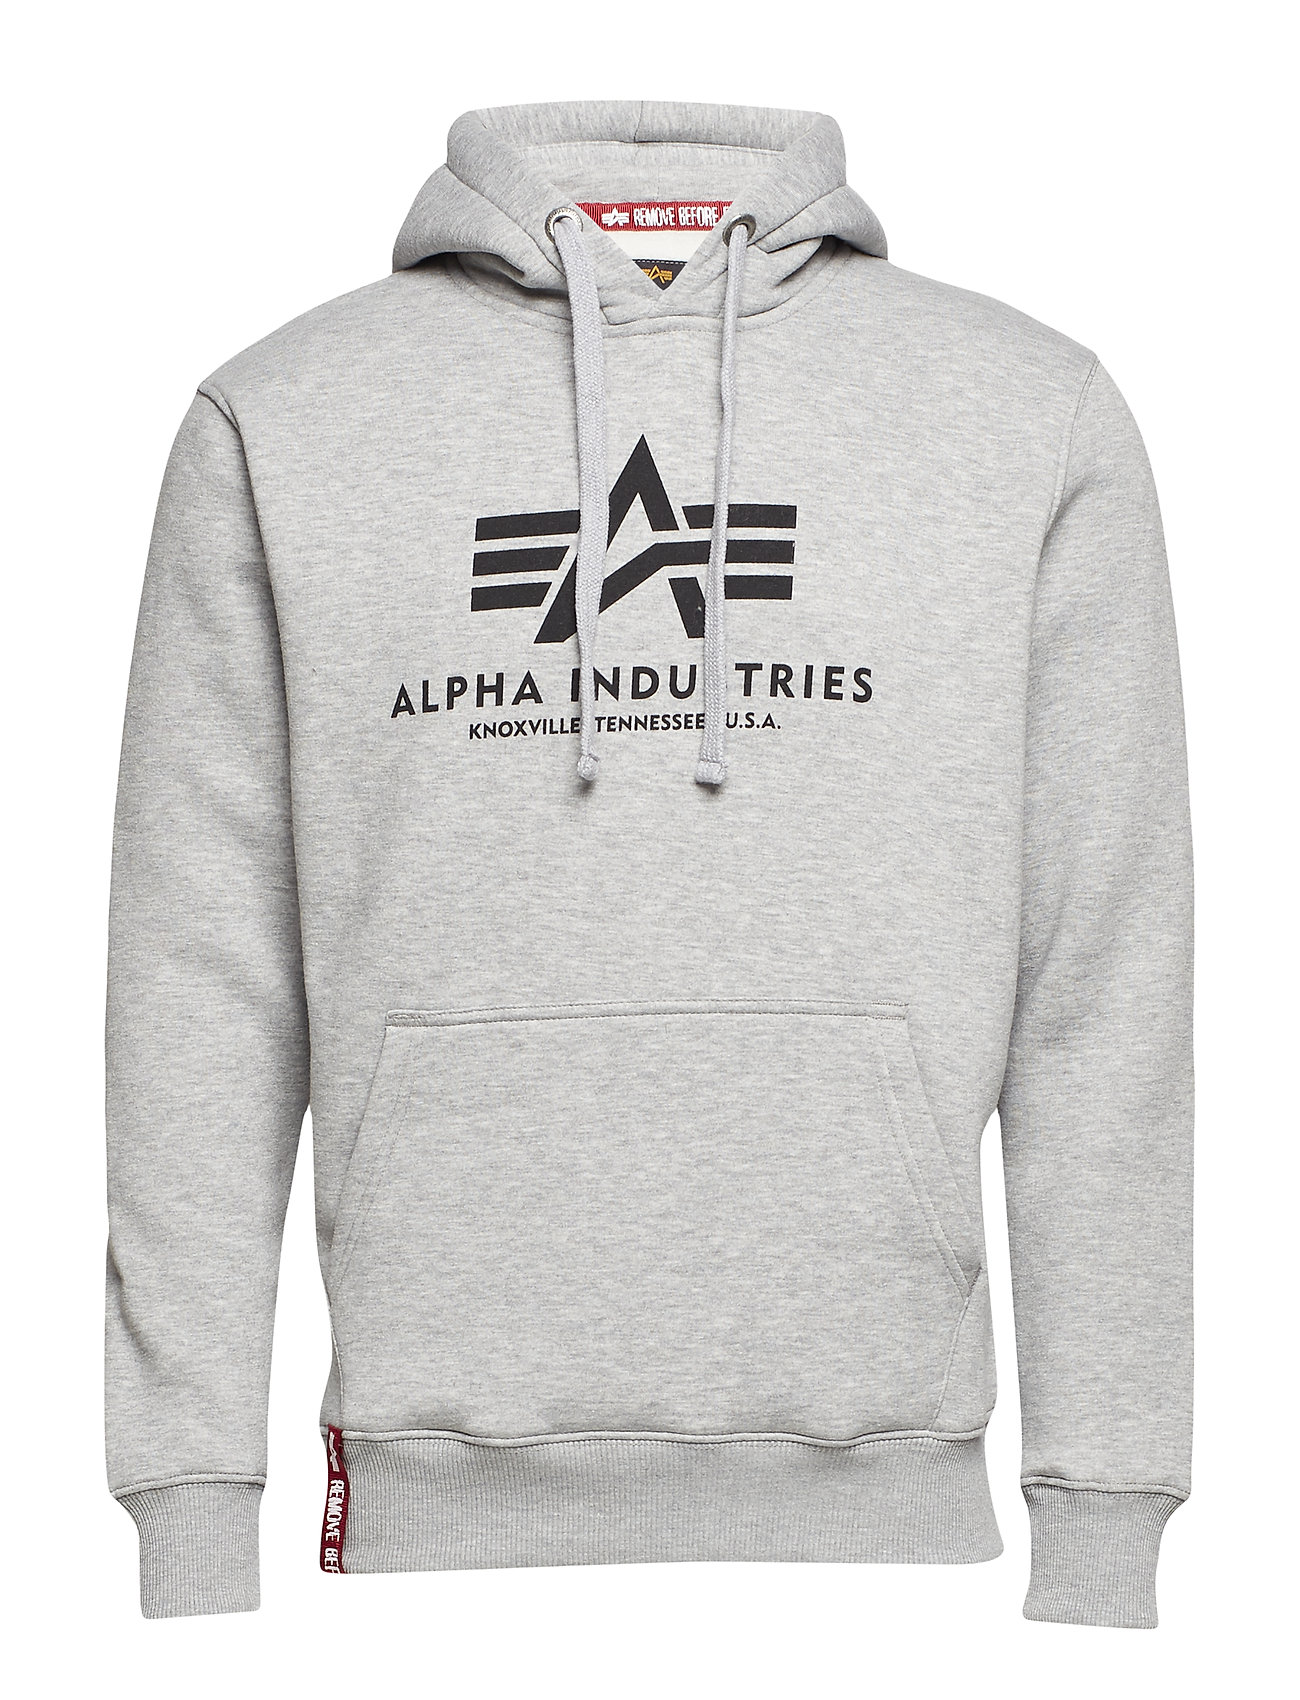 Basic kapuzenpullover Alpha bei Hoody Industries & – Booztlet sweatshirts – einkaufen